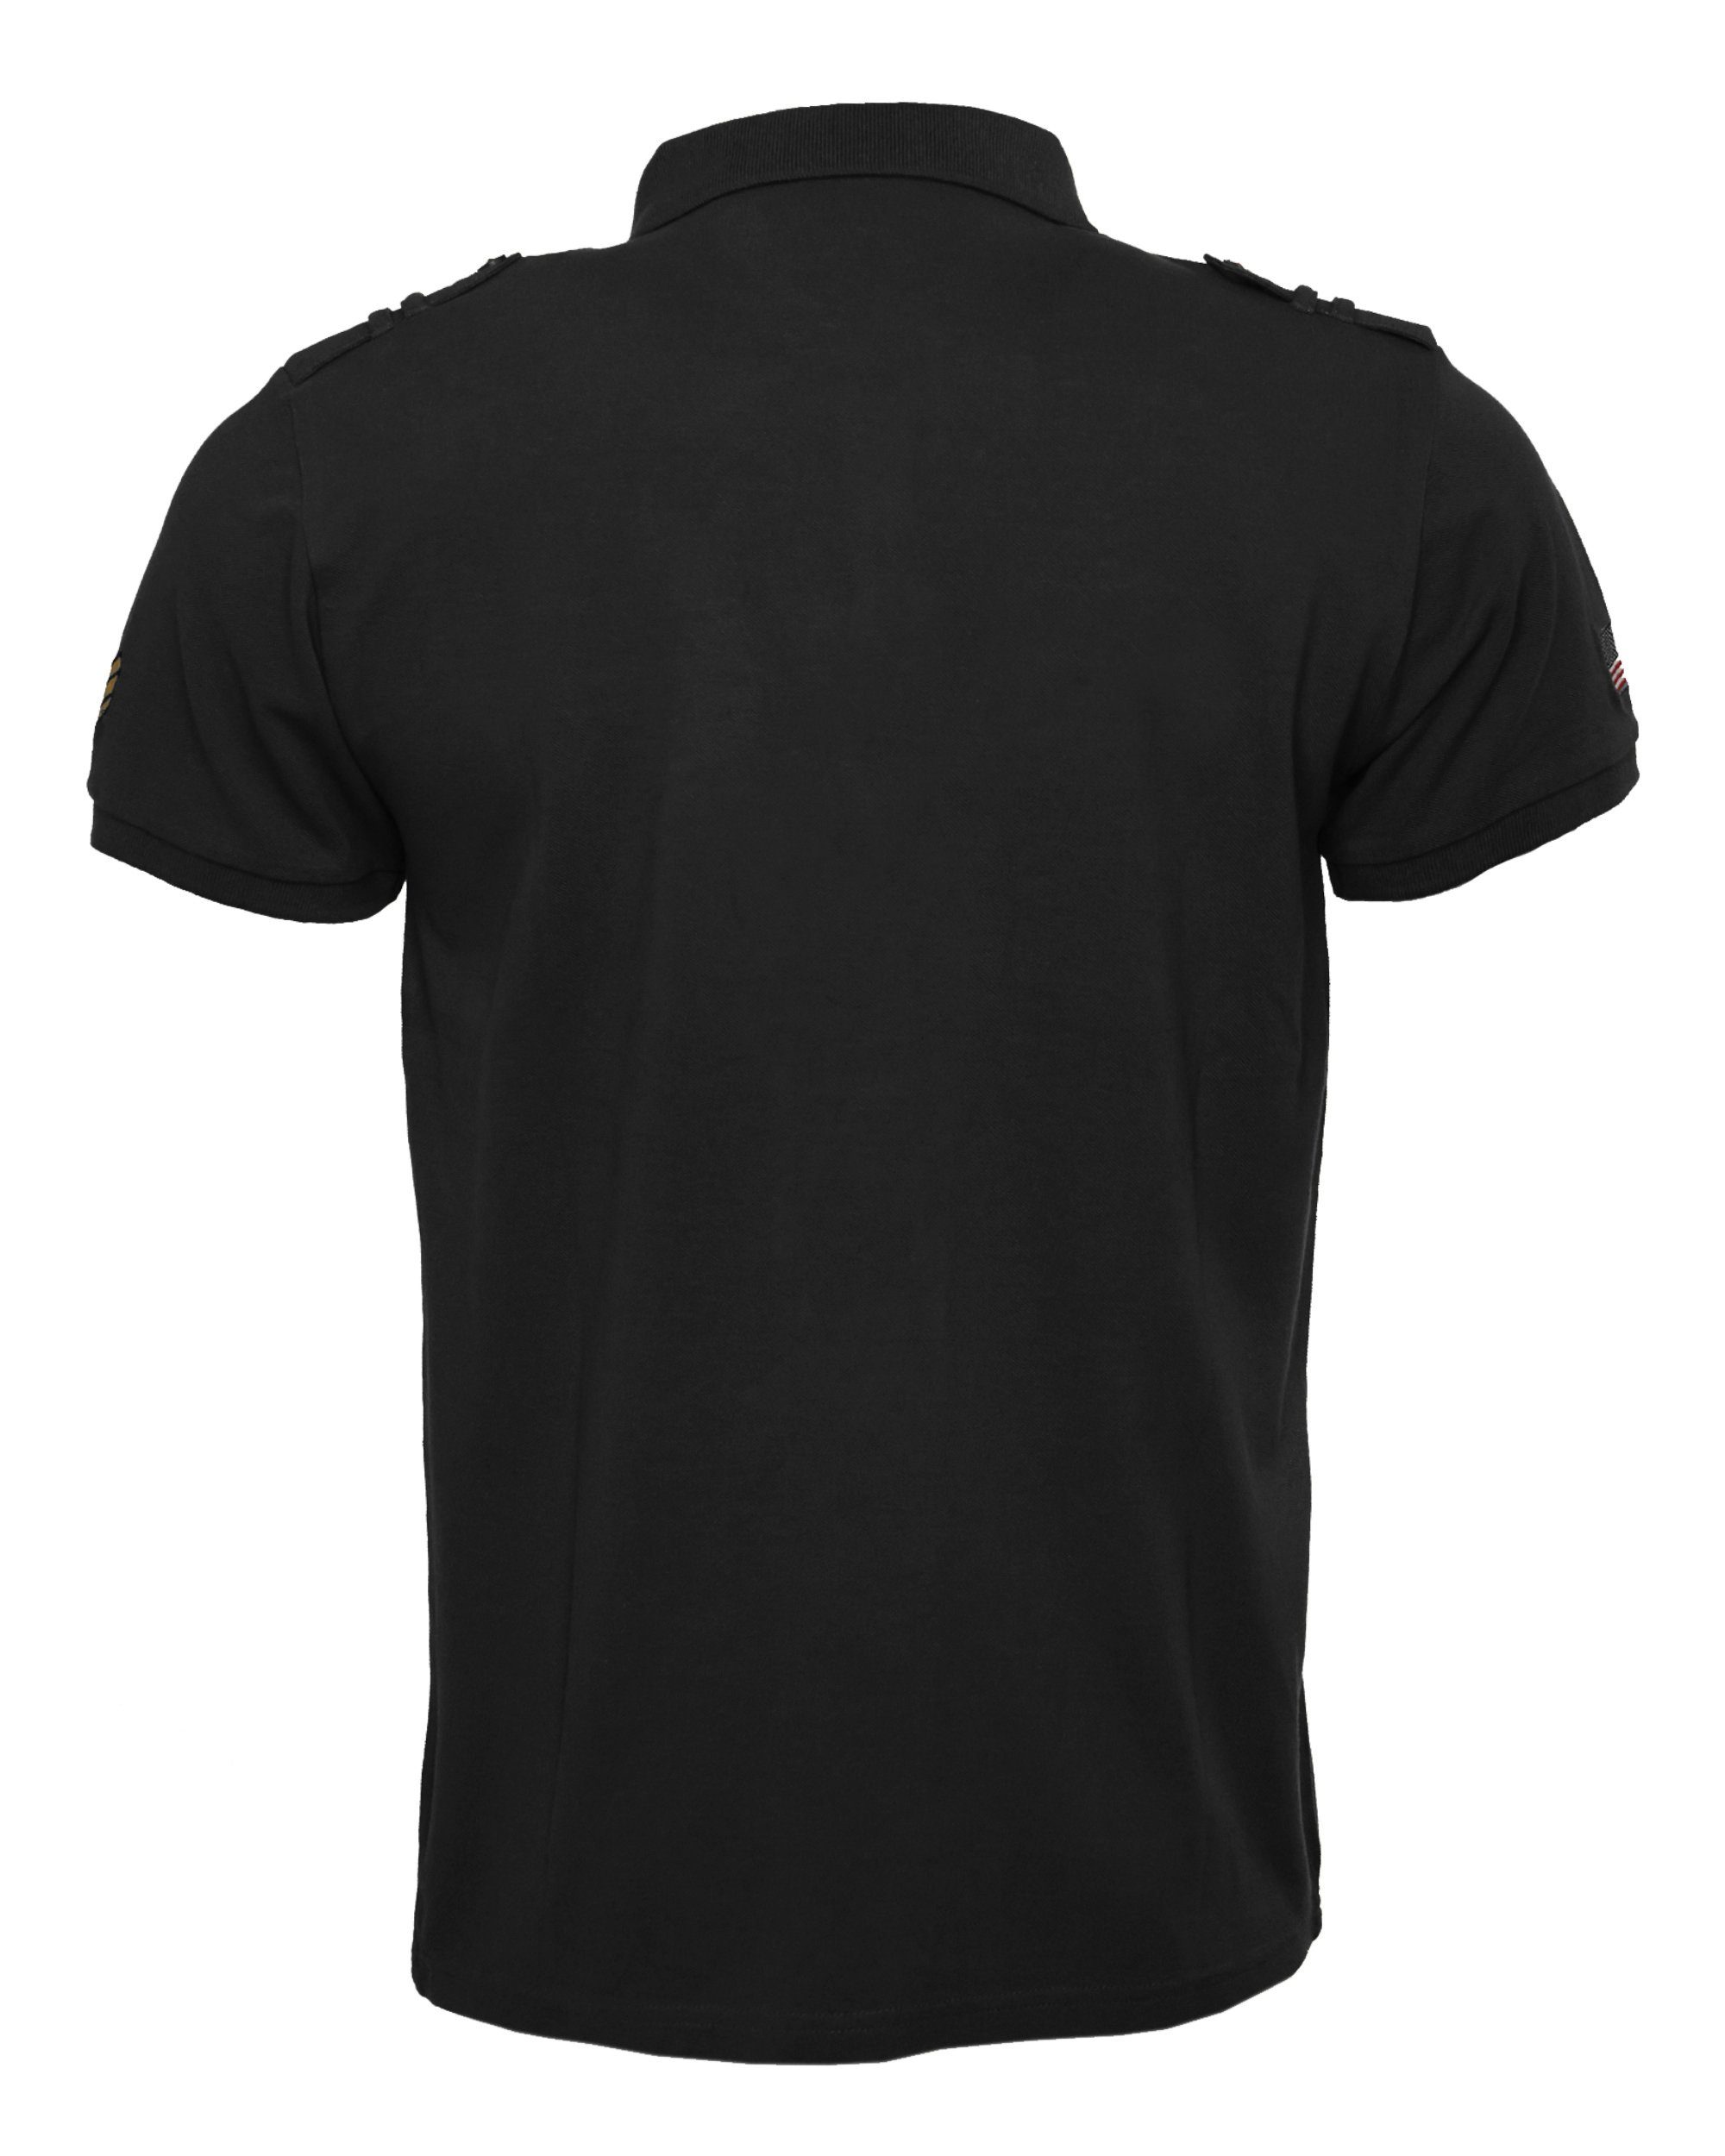 GUN T-Shirt TOP black TG20213003